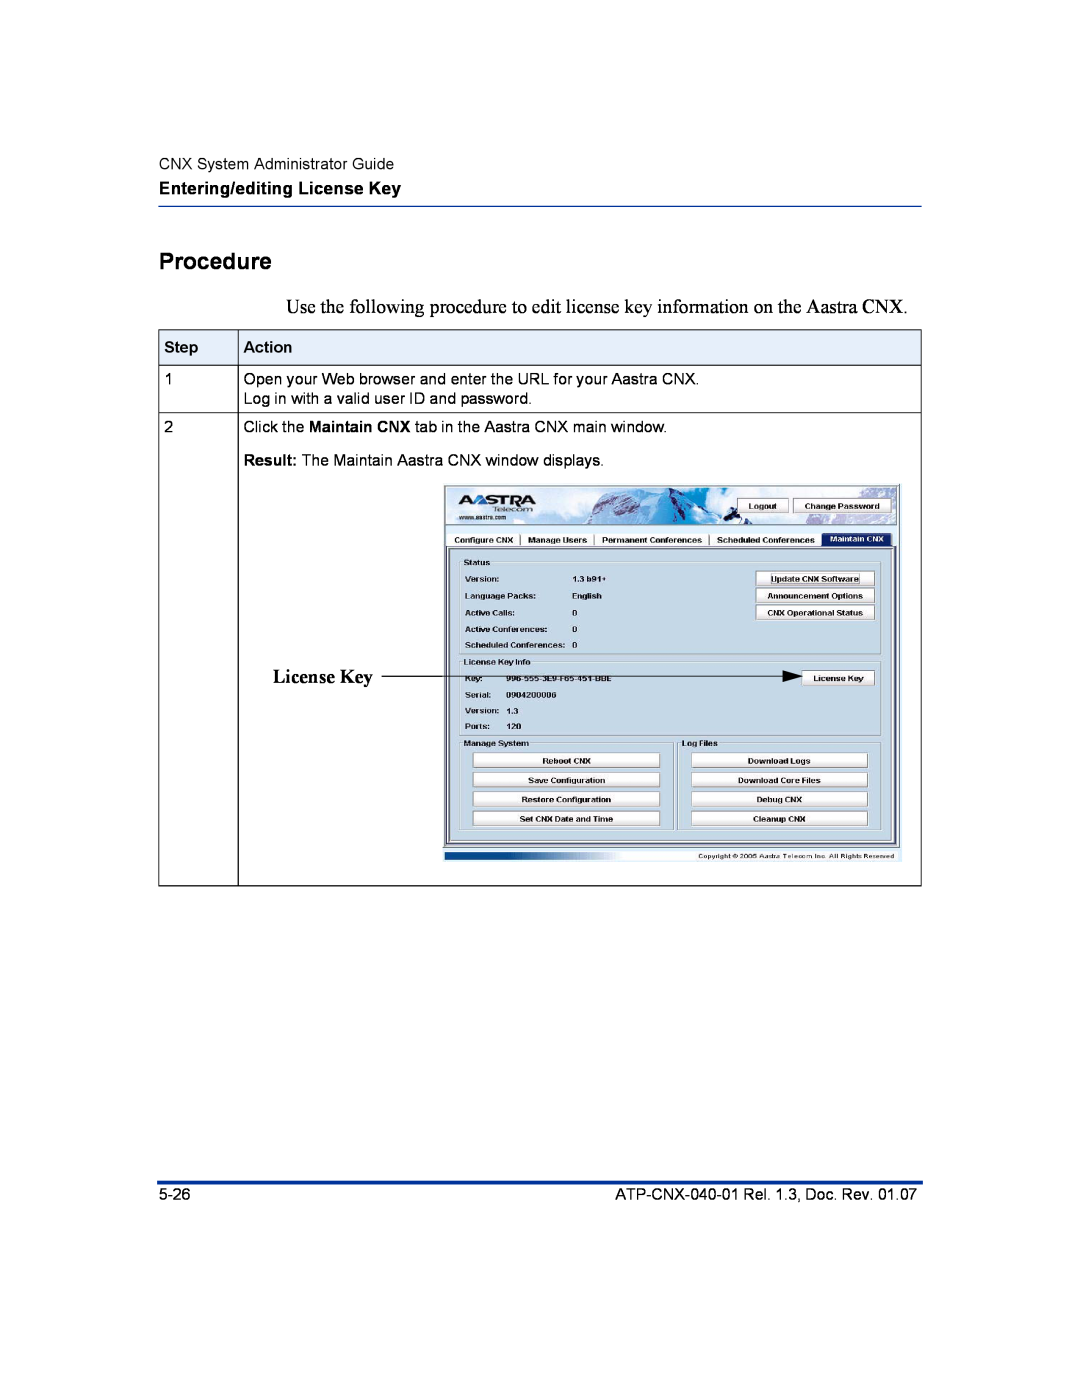 Aastra Telecom ATP-CNX-040-01 manual Procedure, Entering/editing License Key, Step, Action 